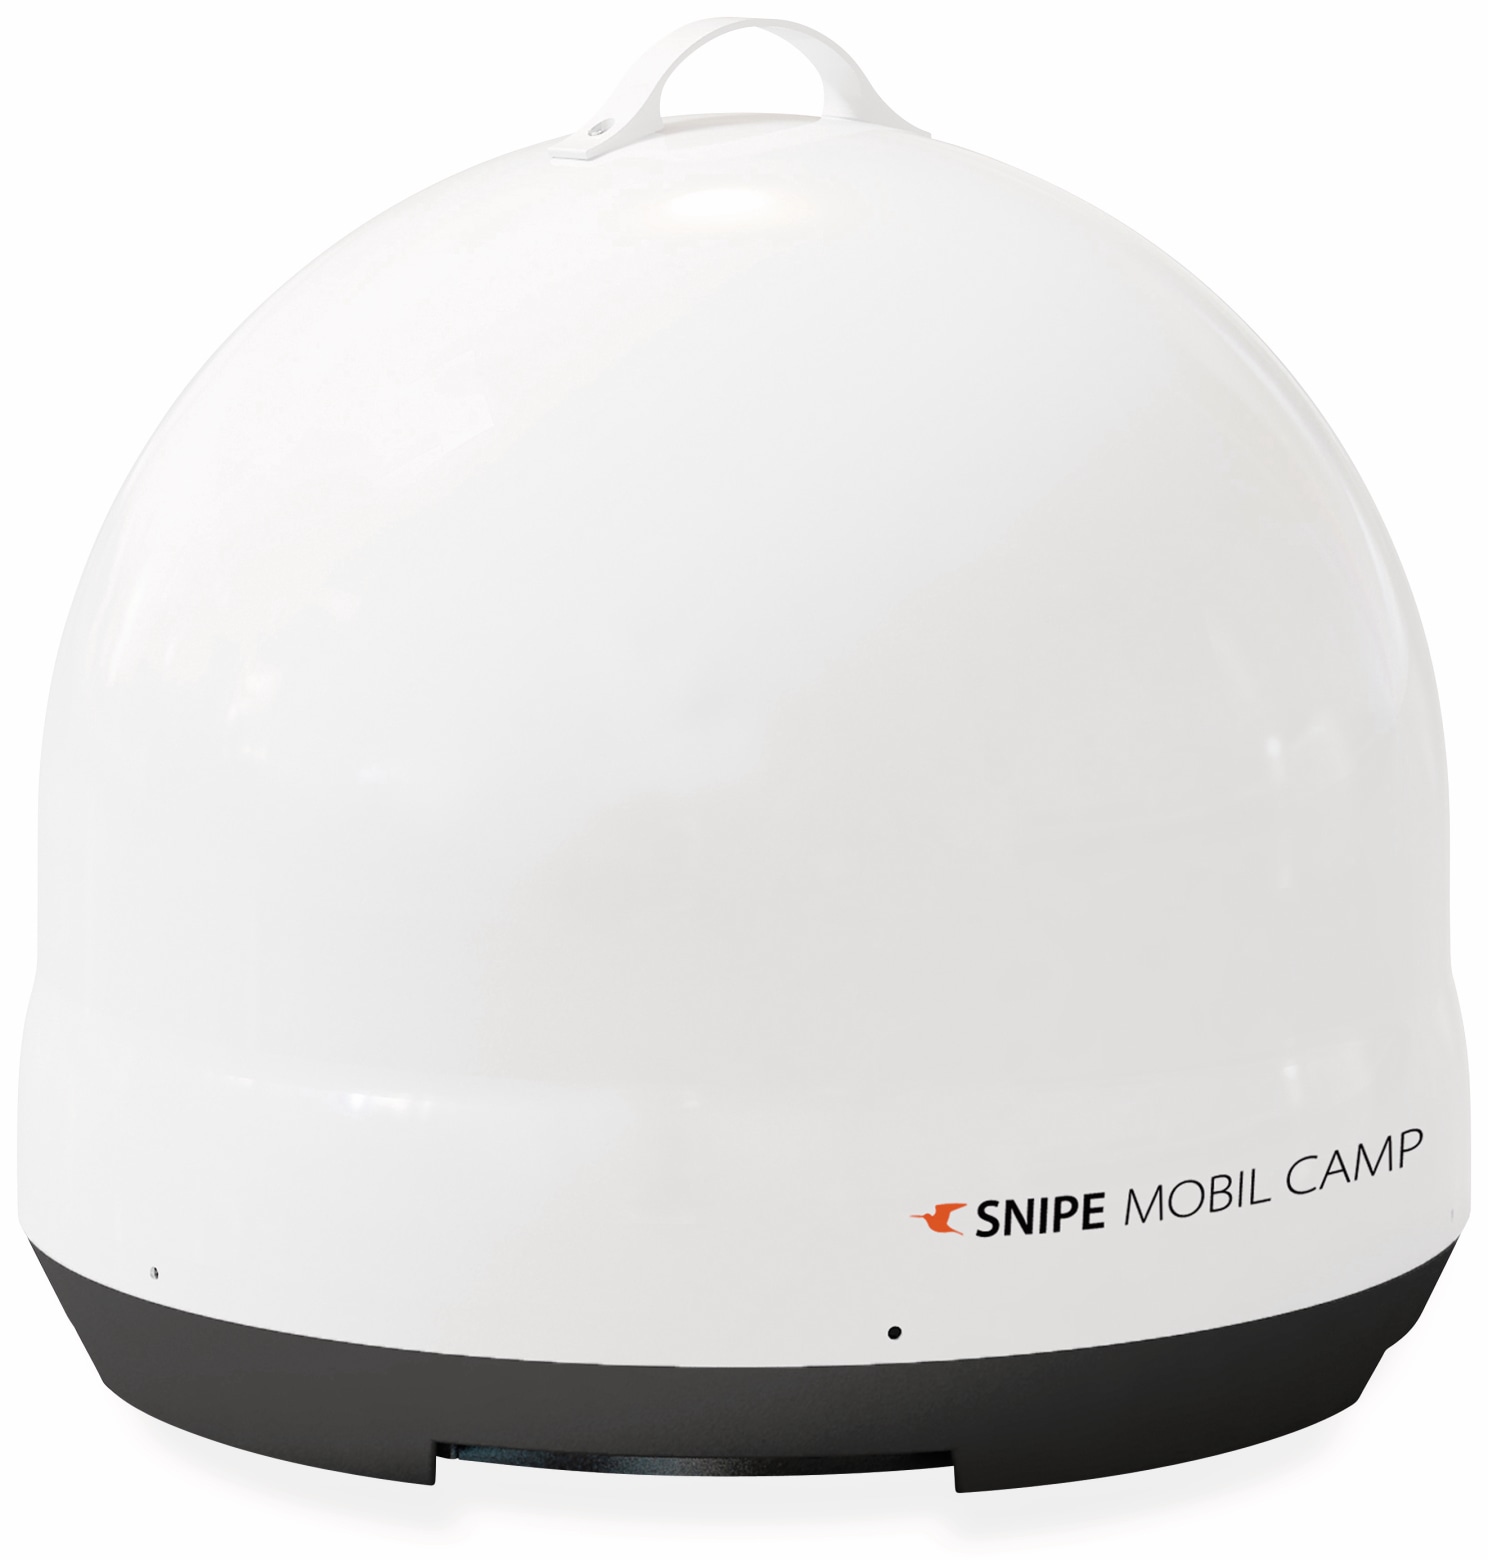 Selfsat Campingantenne Snipe Mobil Camp, Single